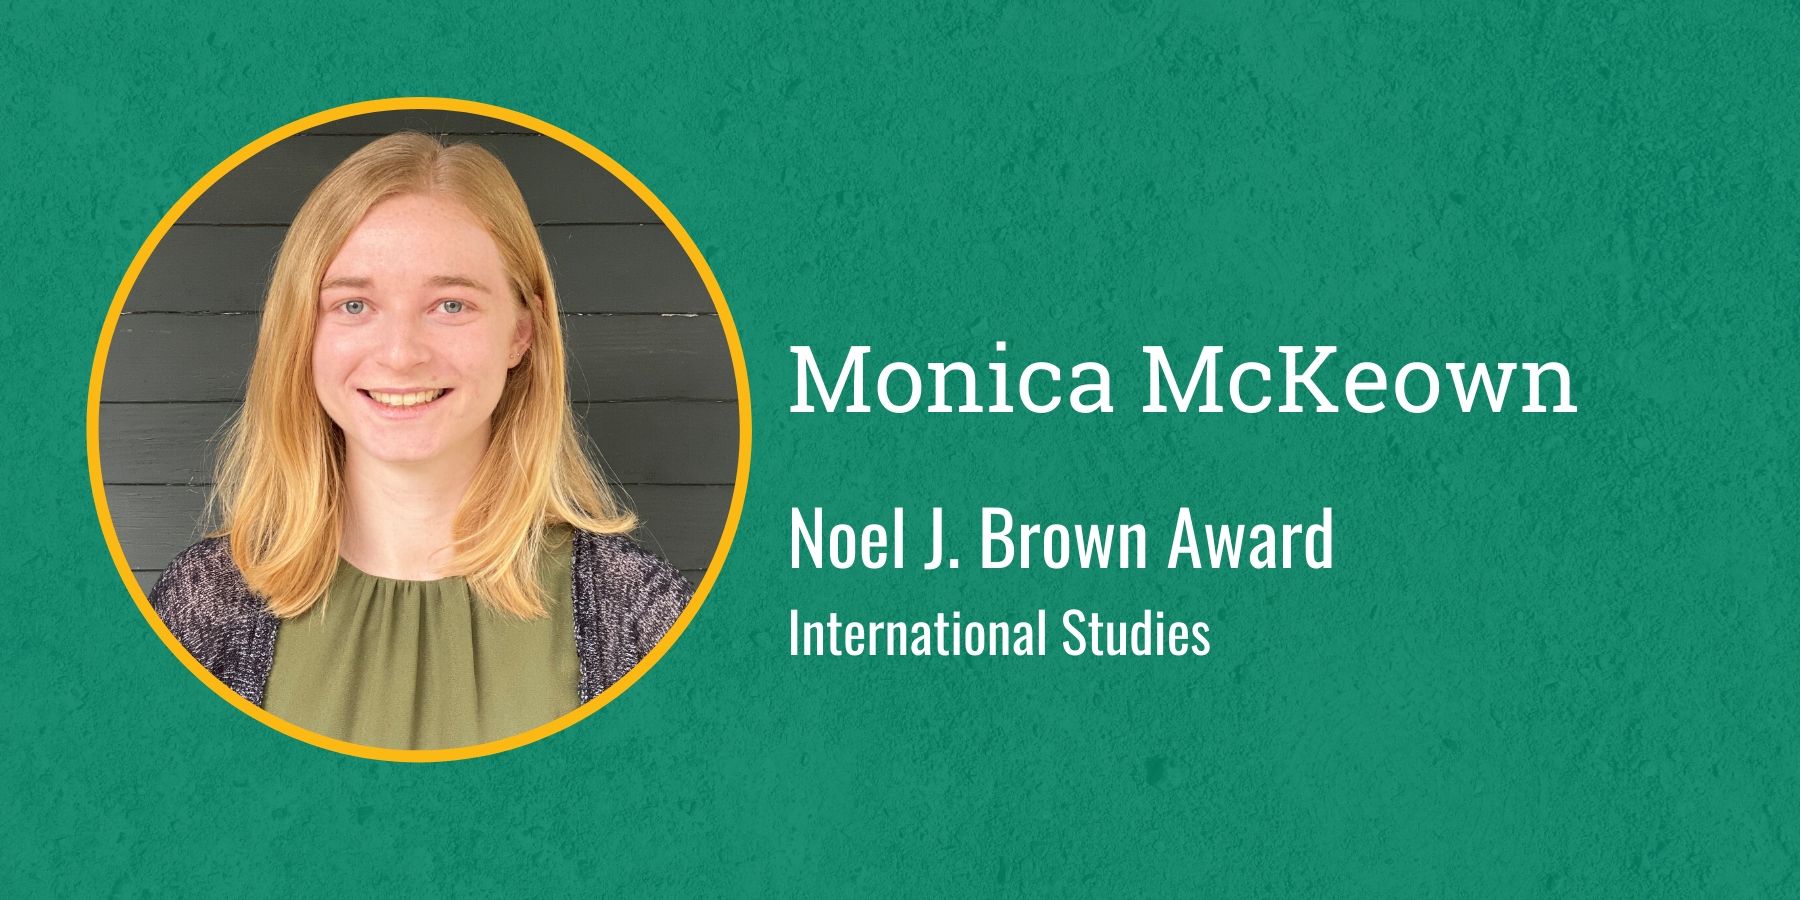 Photo of Monica McKeown and text Noel J. Brown Award, International Studies